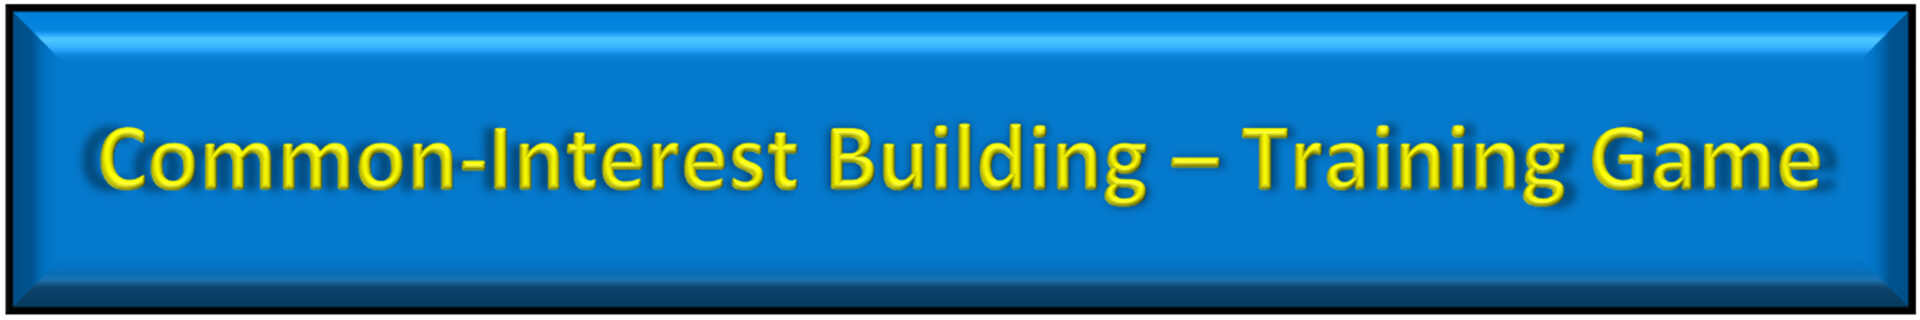 Button - Common-Interest Building - Training G